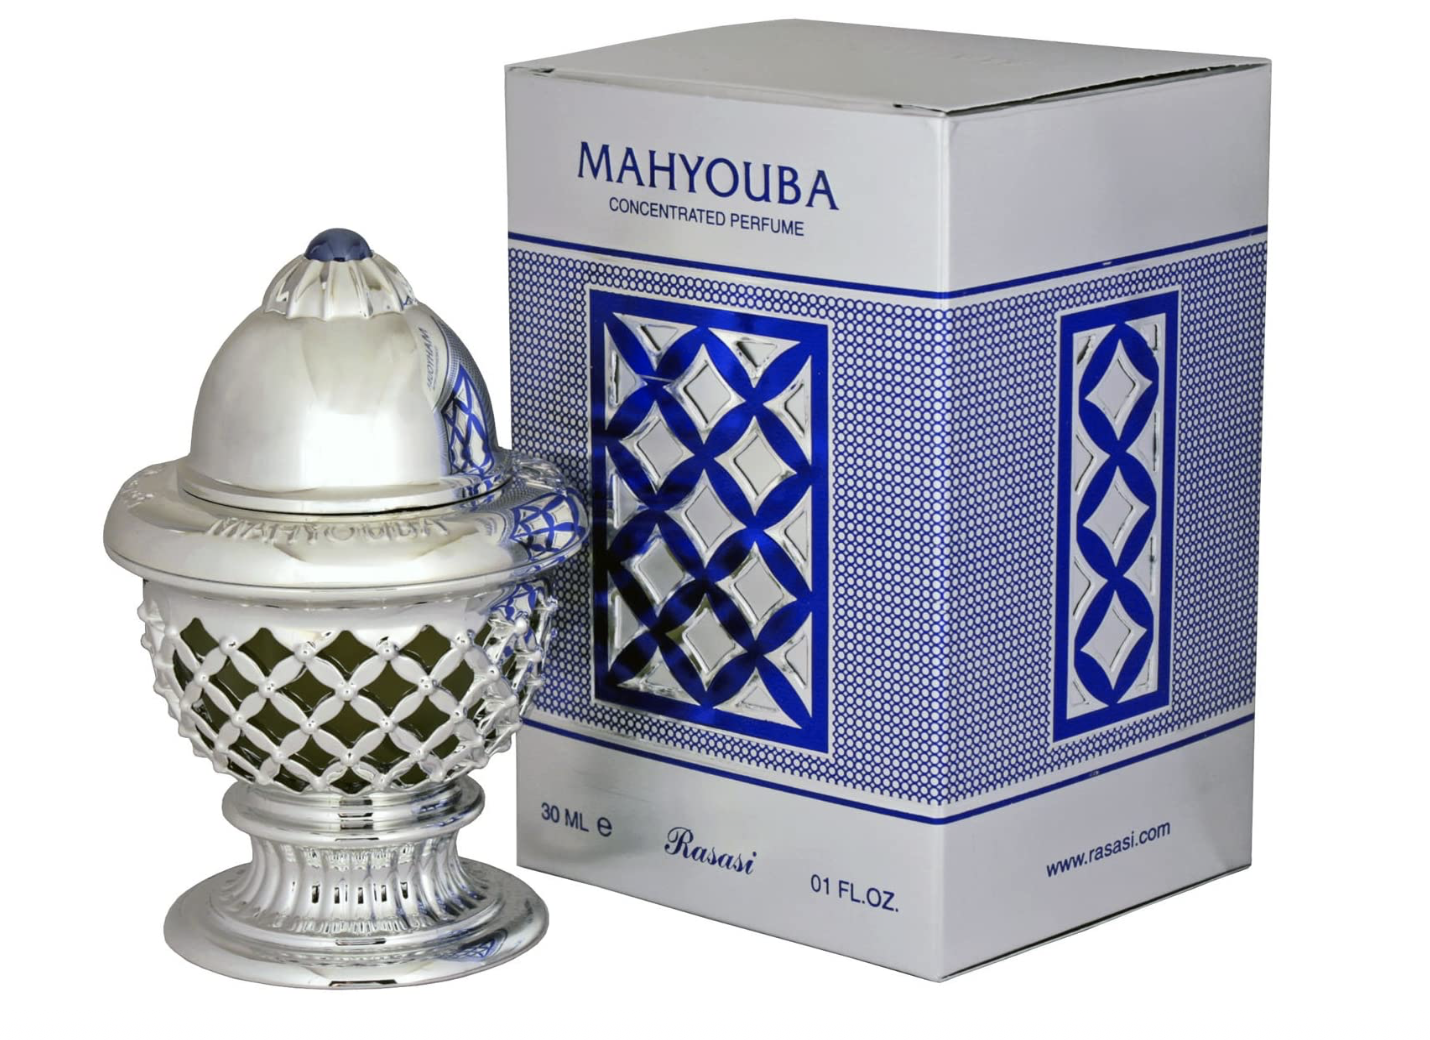 RASASI MAHYOUBA PERFUME FOR MAN AND WOMEN 30 ML